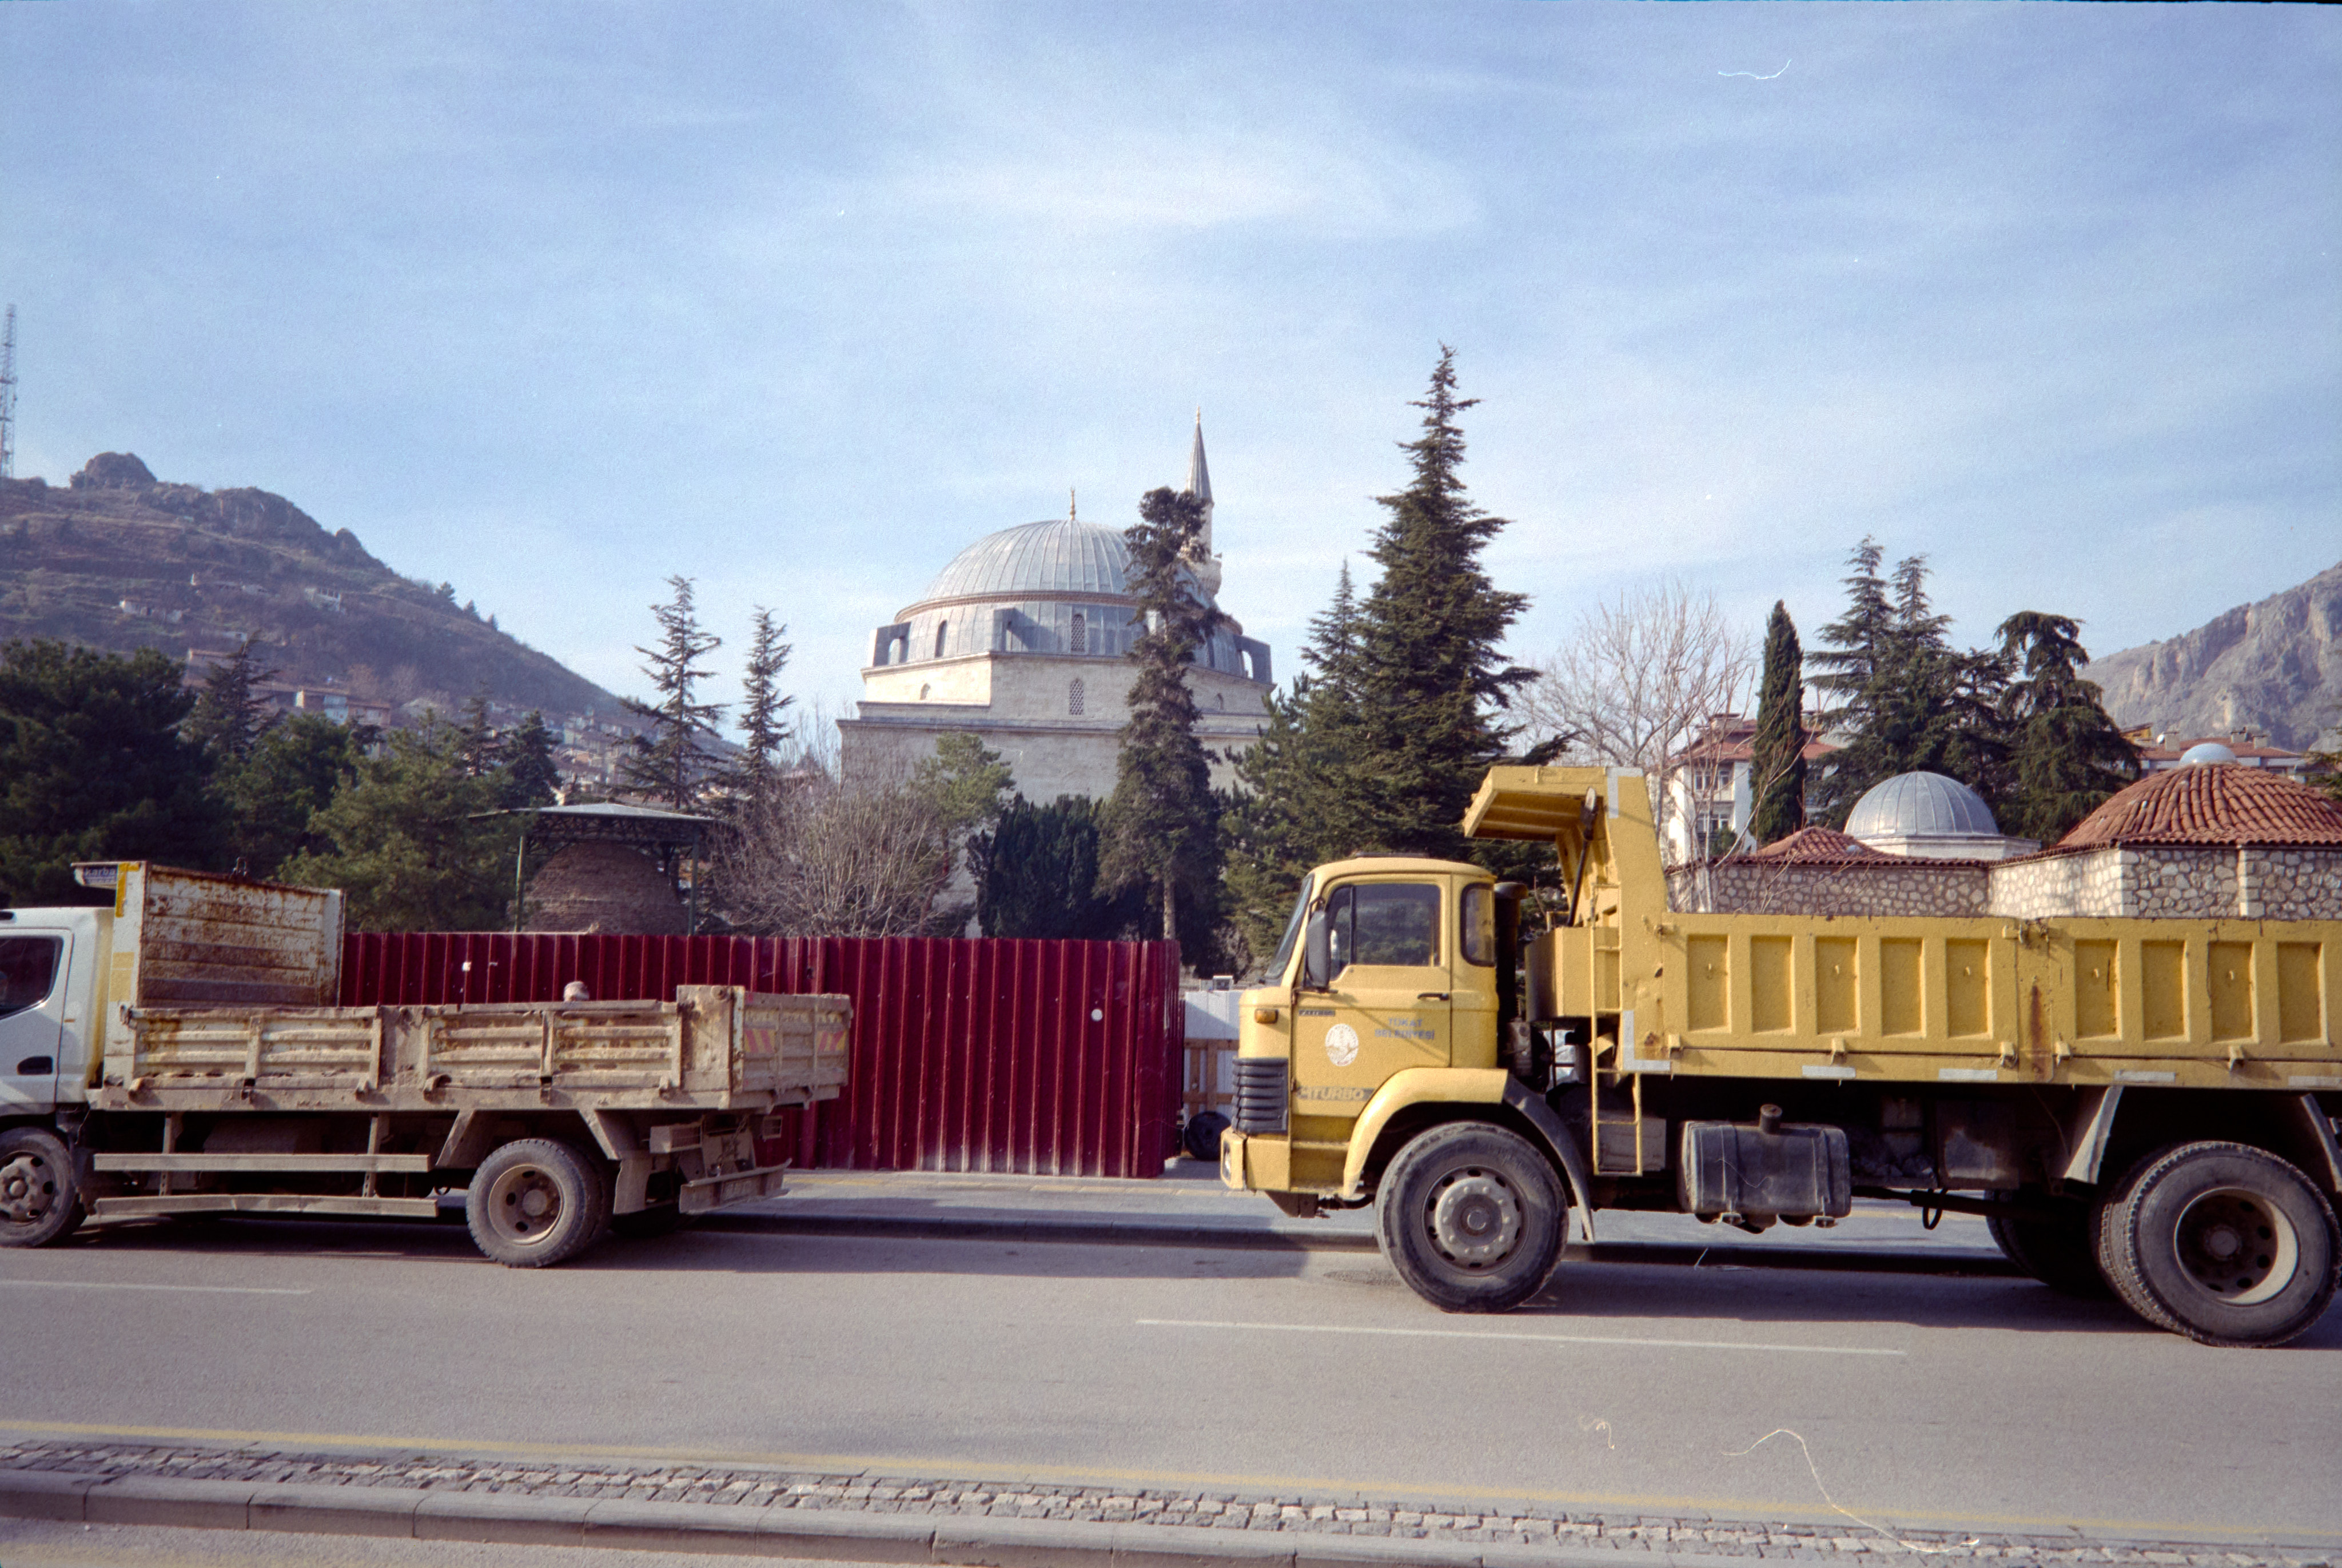 İnşaat (construction) at its finest, near Tokat's Ulu Cami